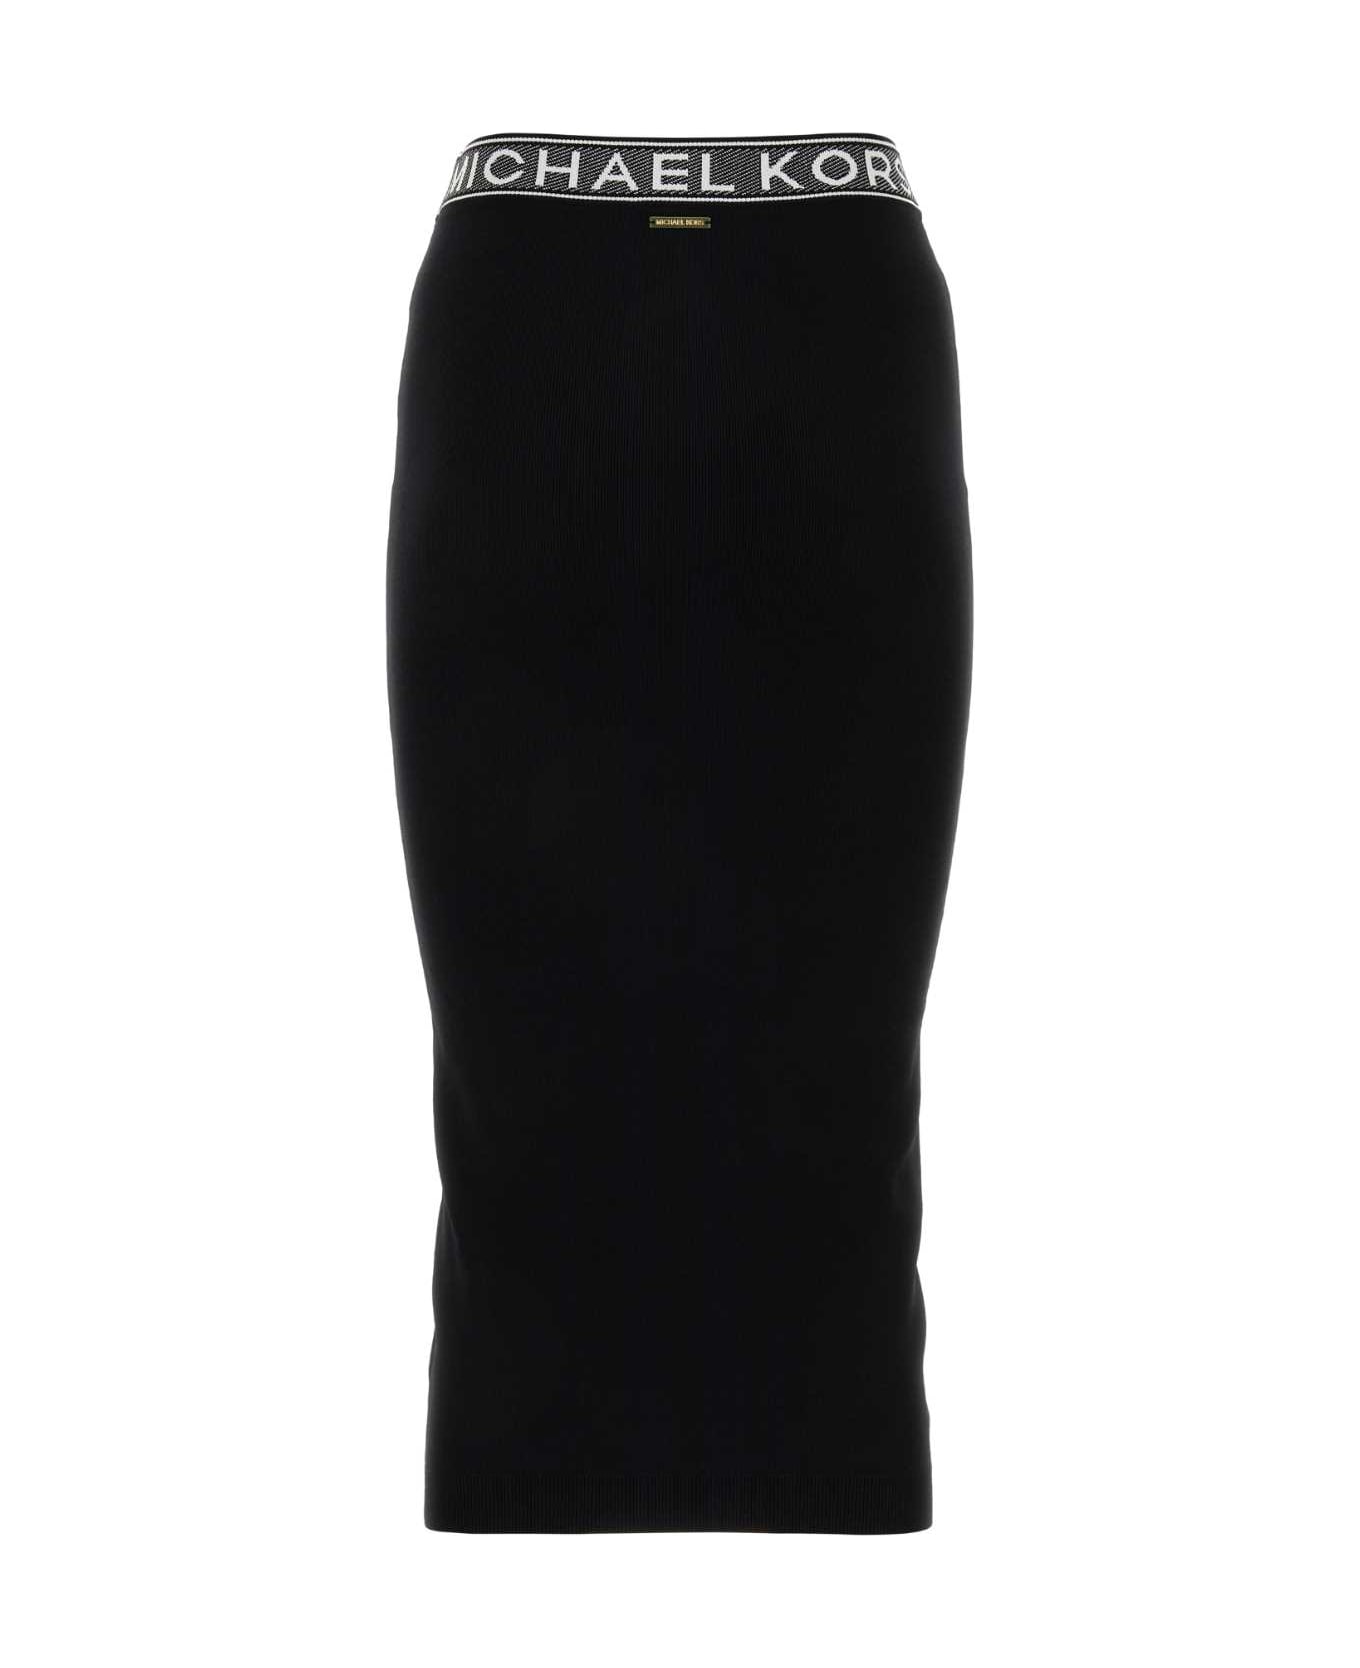 Michael Kors Black Stretch Viscose Blend Skirt - BLACK スカート